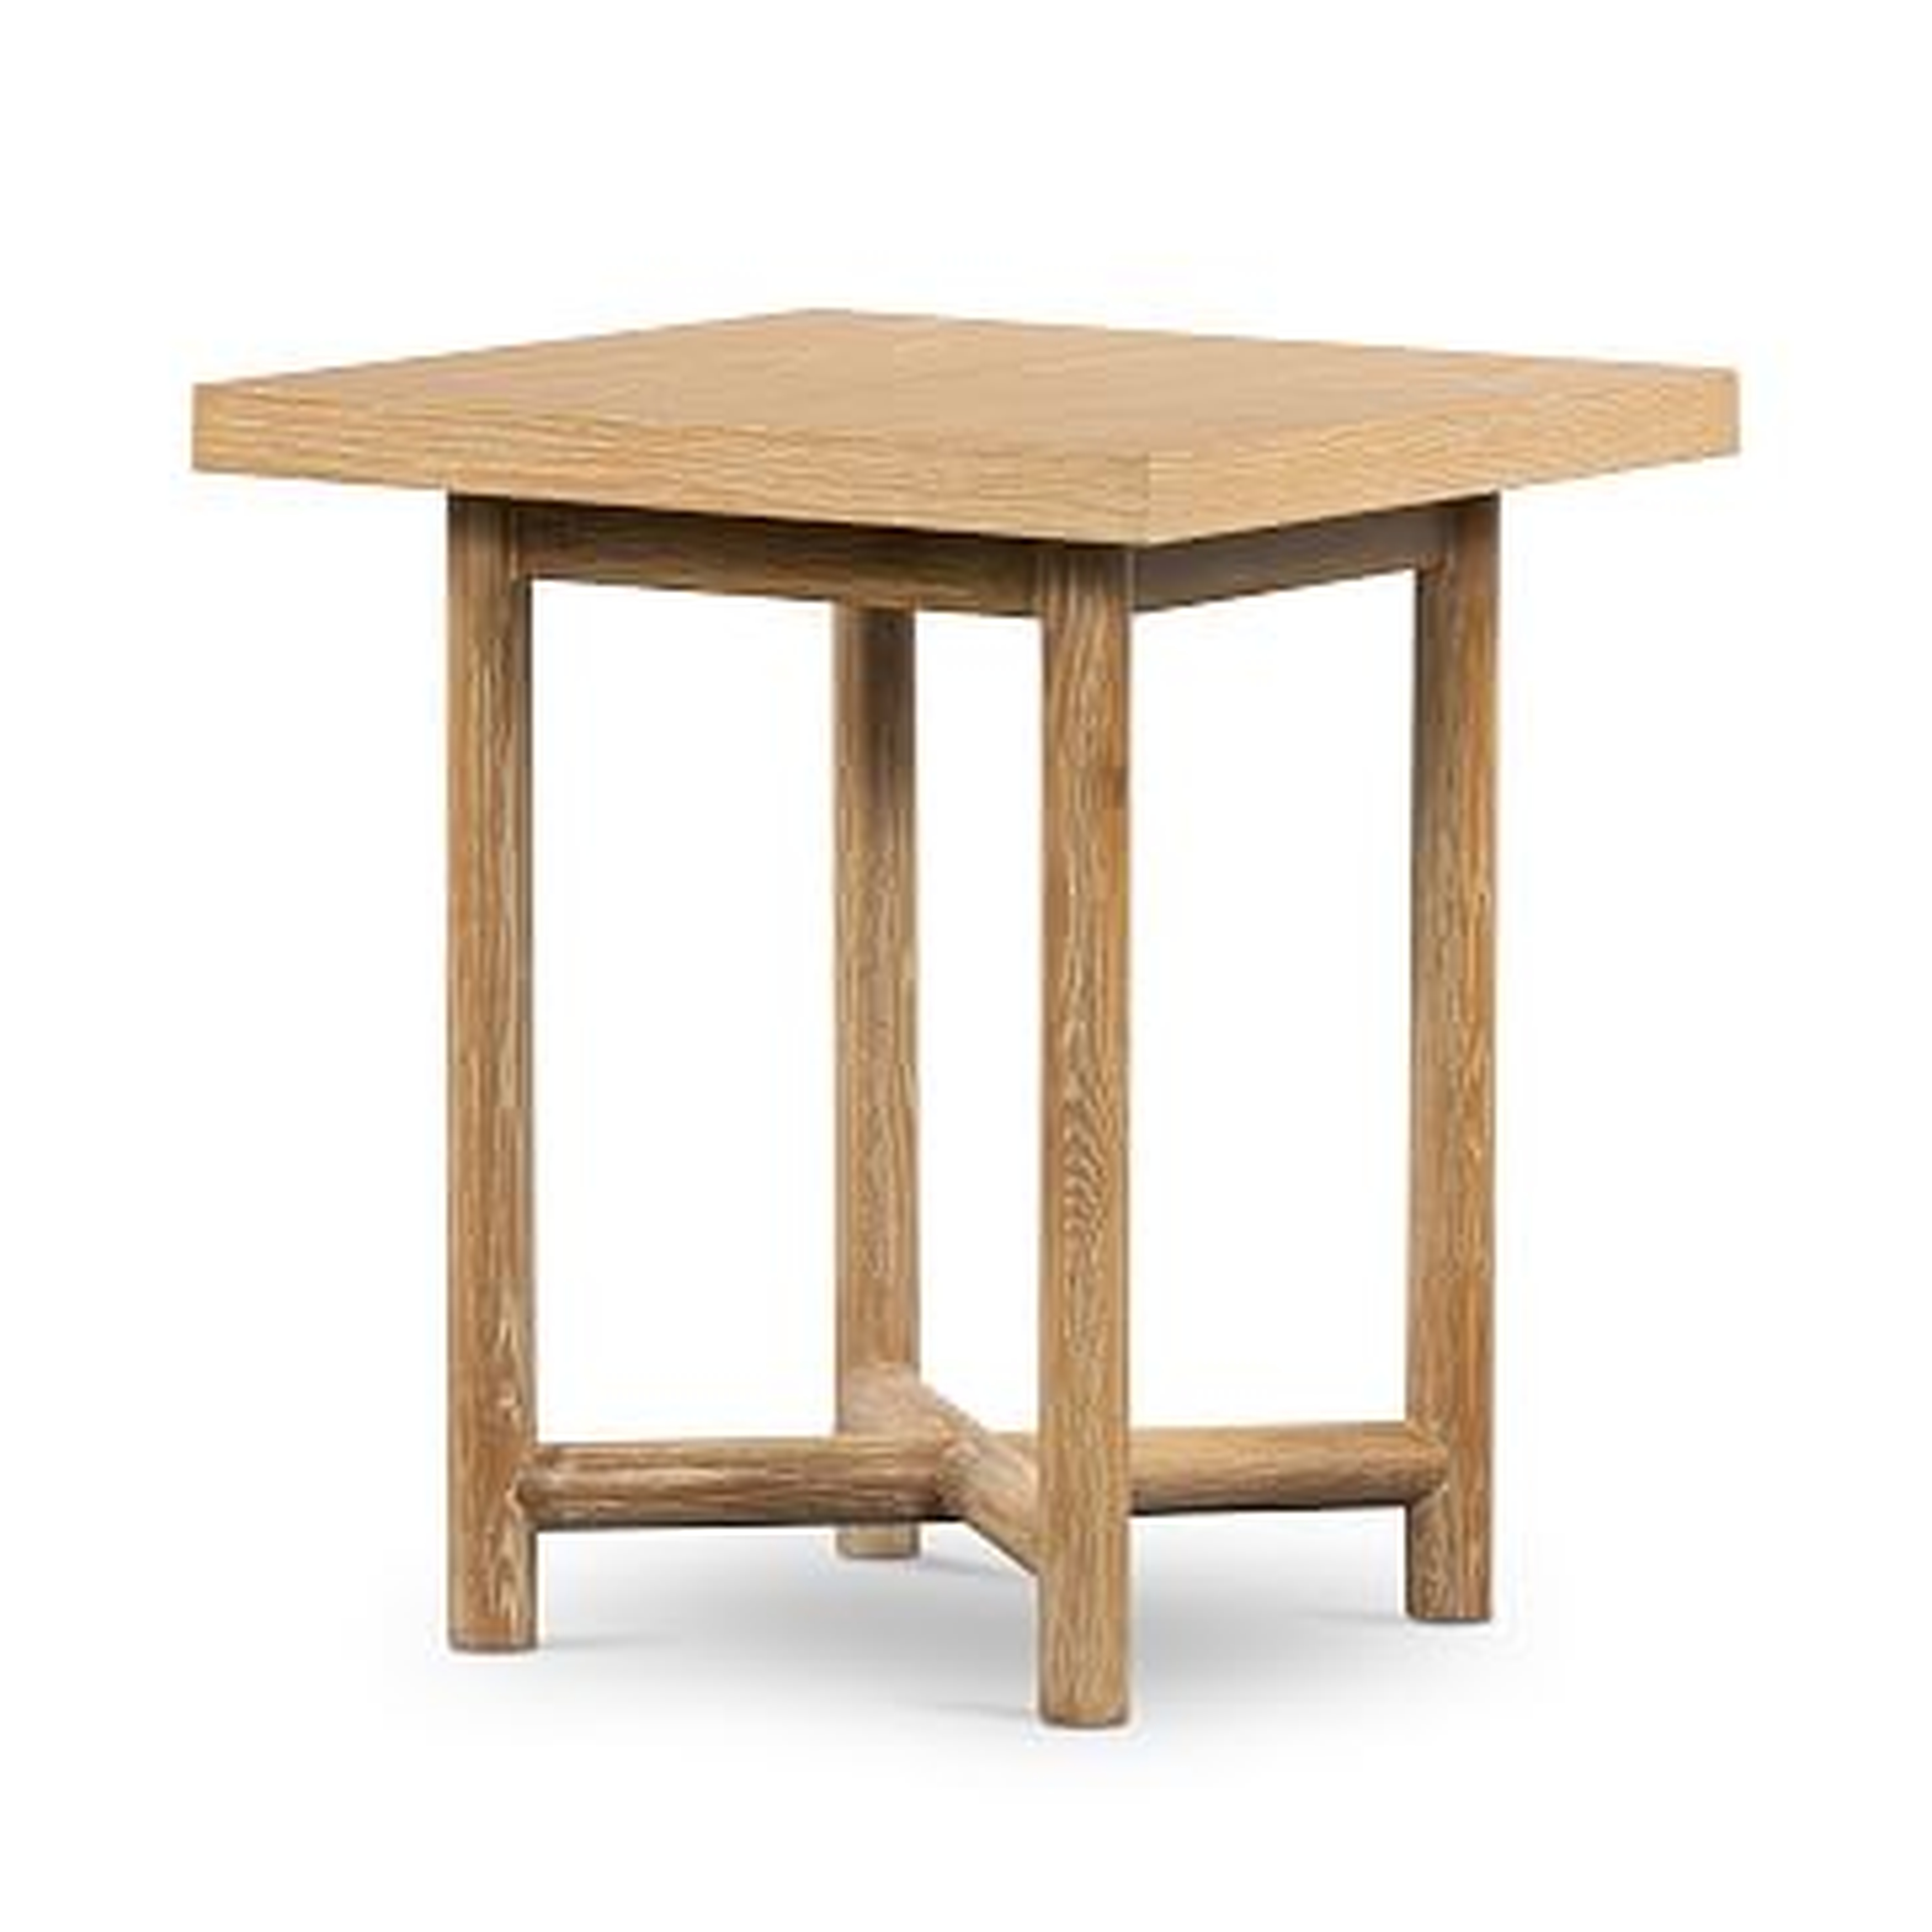 Geometric Oak Base Side Table, Square, Whitewashed Oak - West Elm